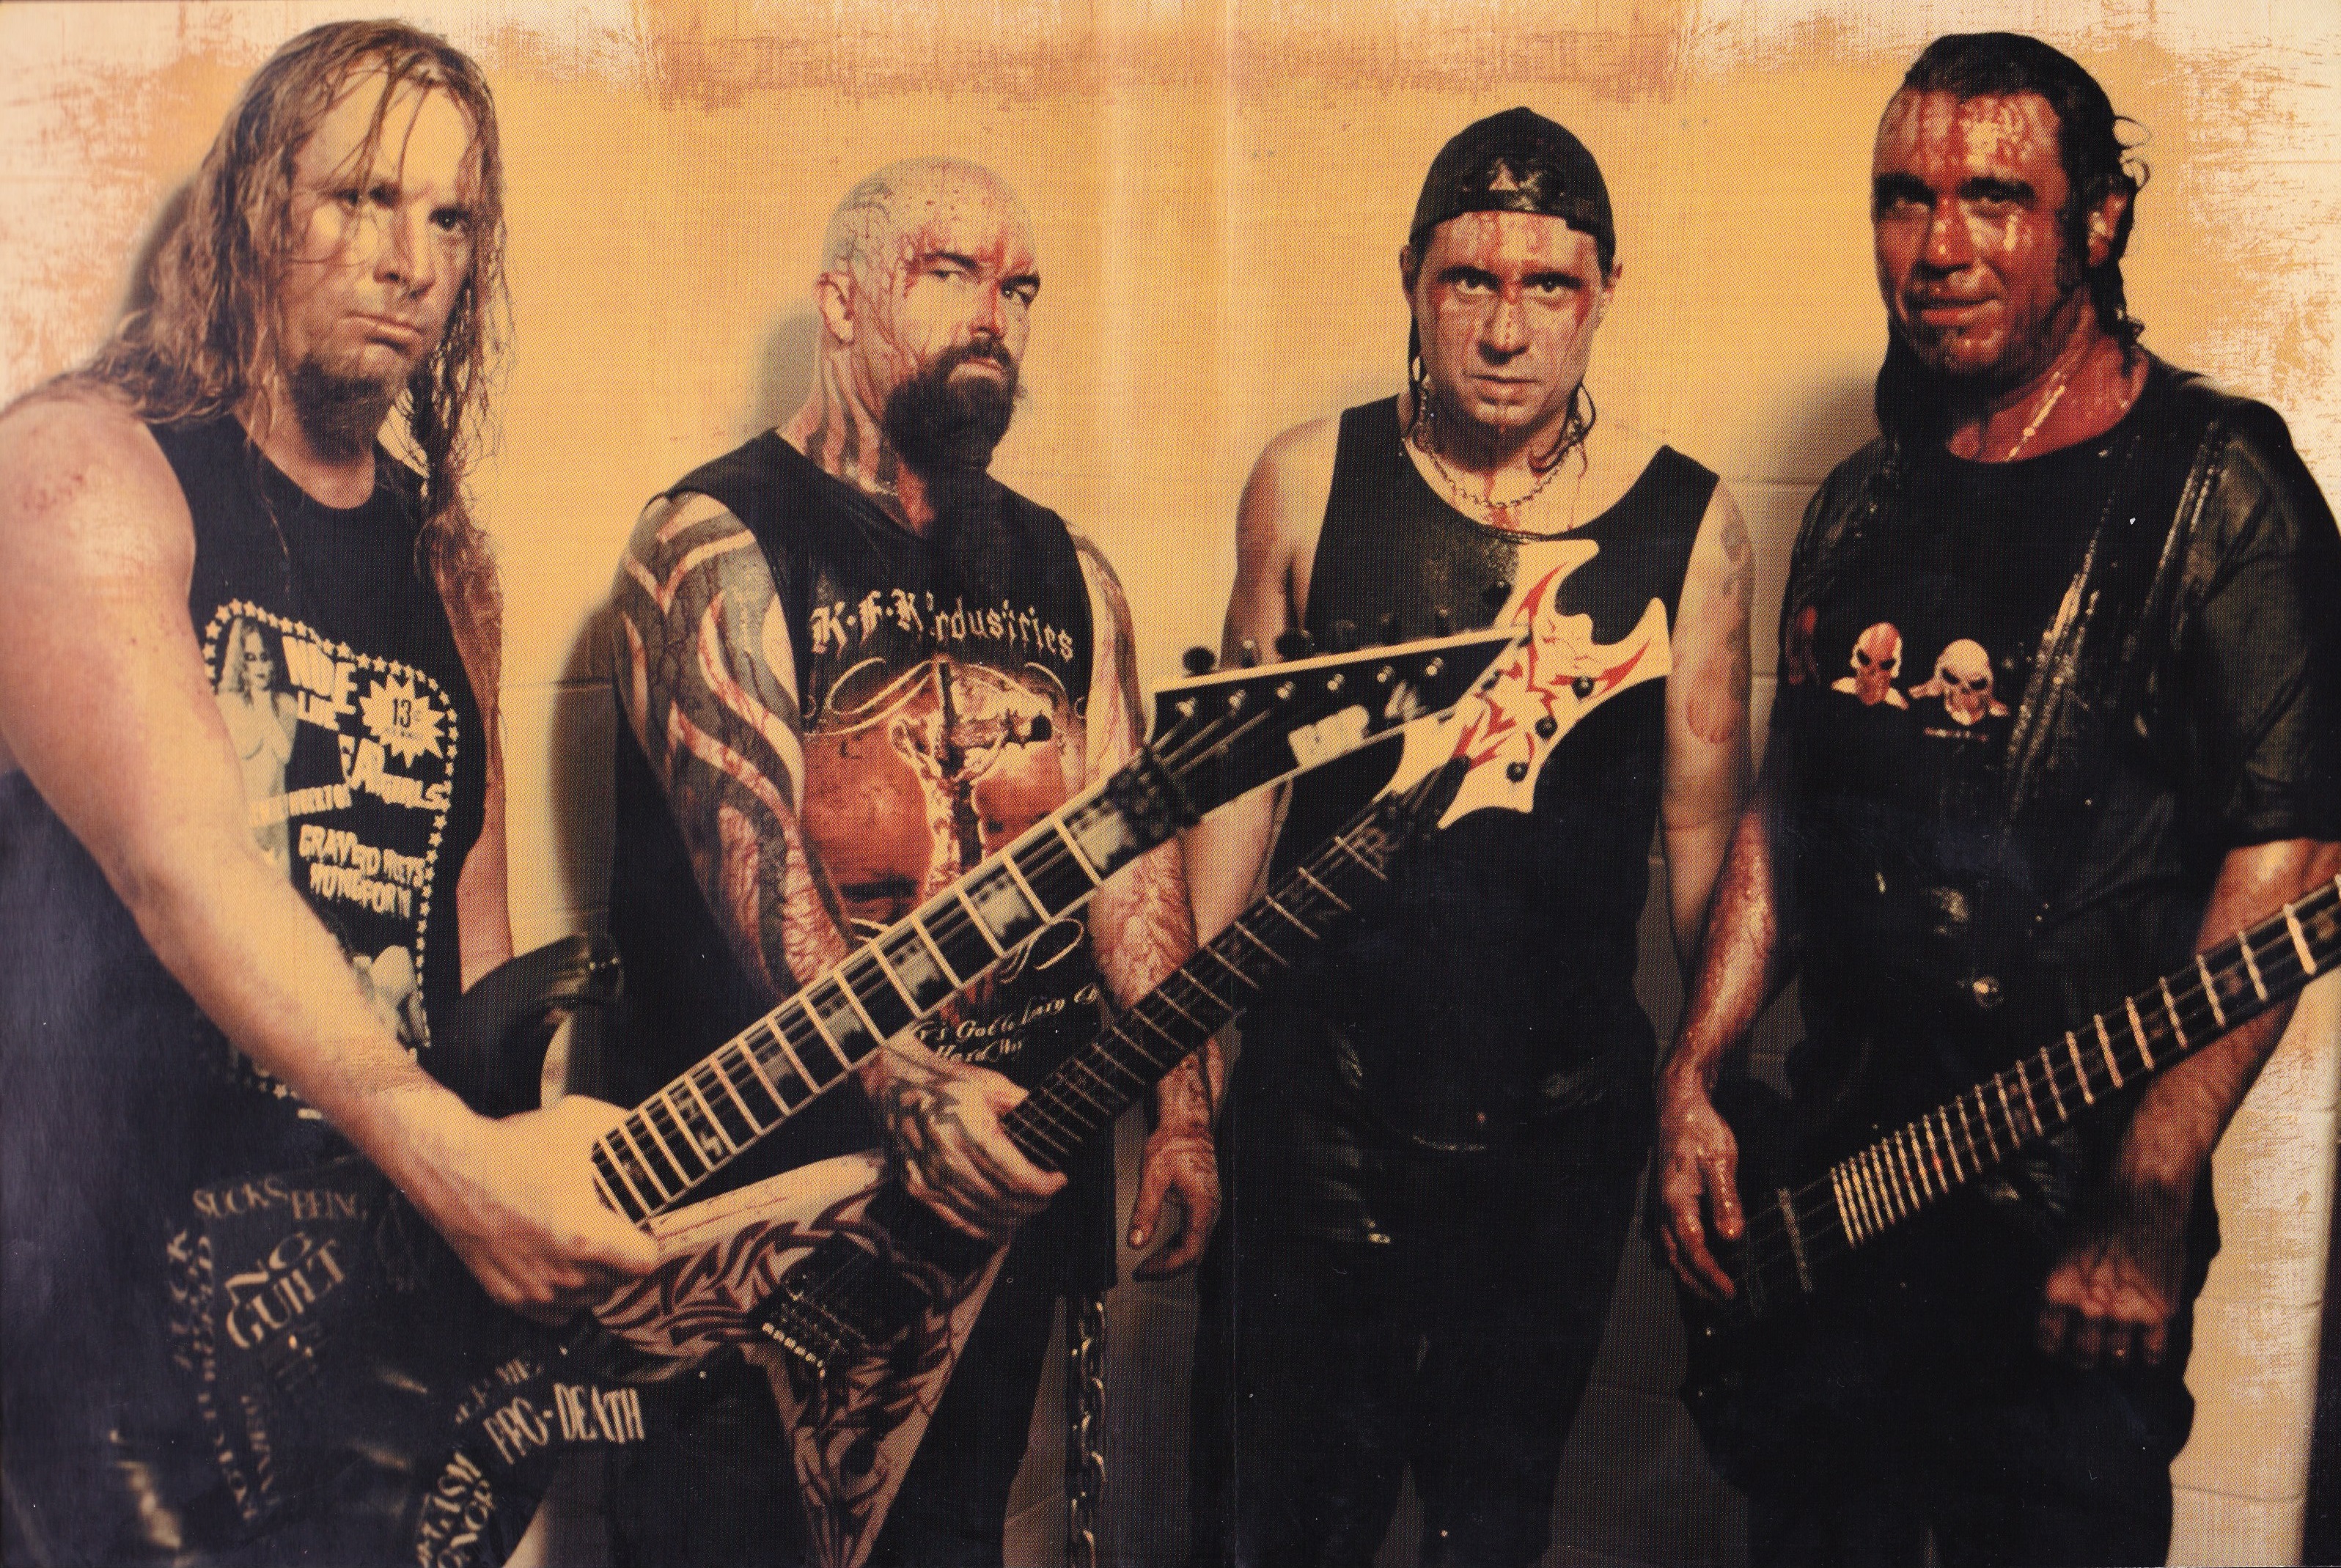 Music Slayer HD Wallpaper | Background Image